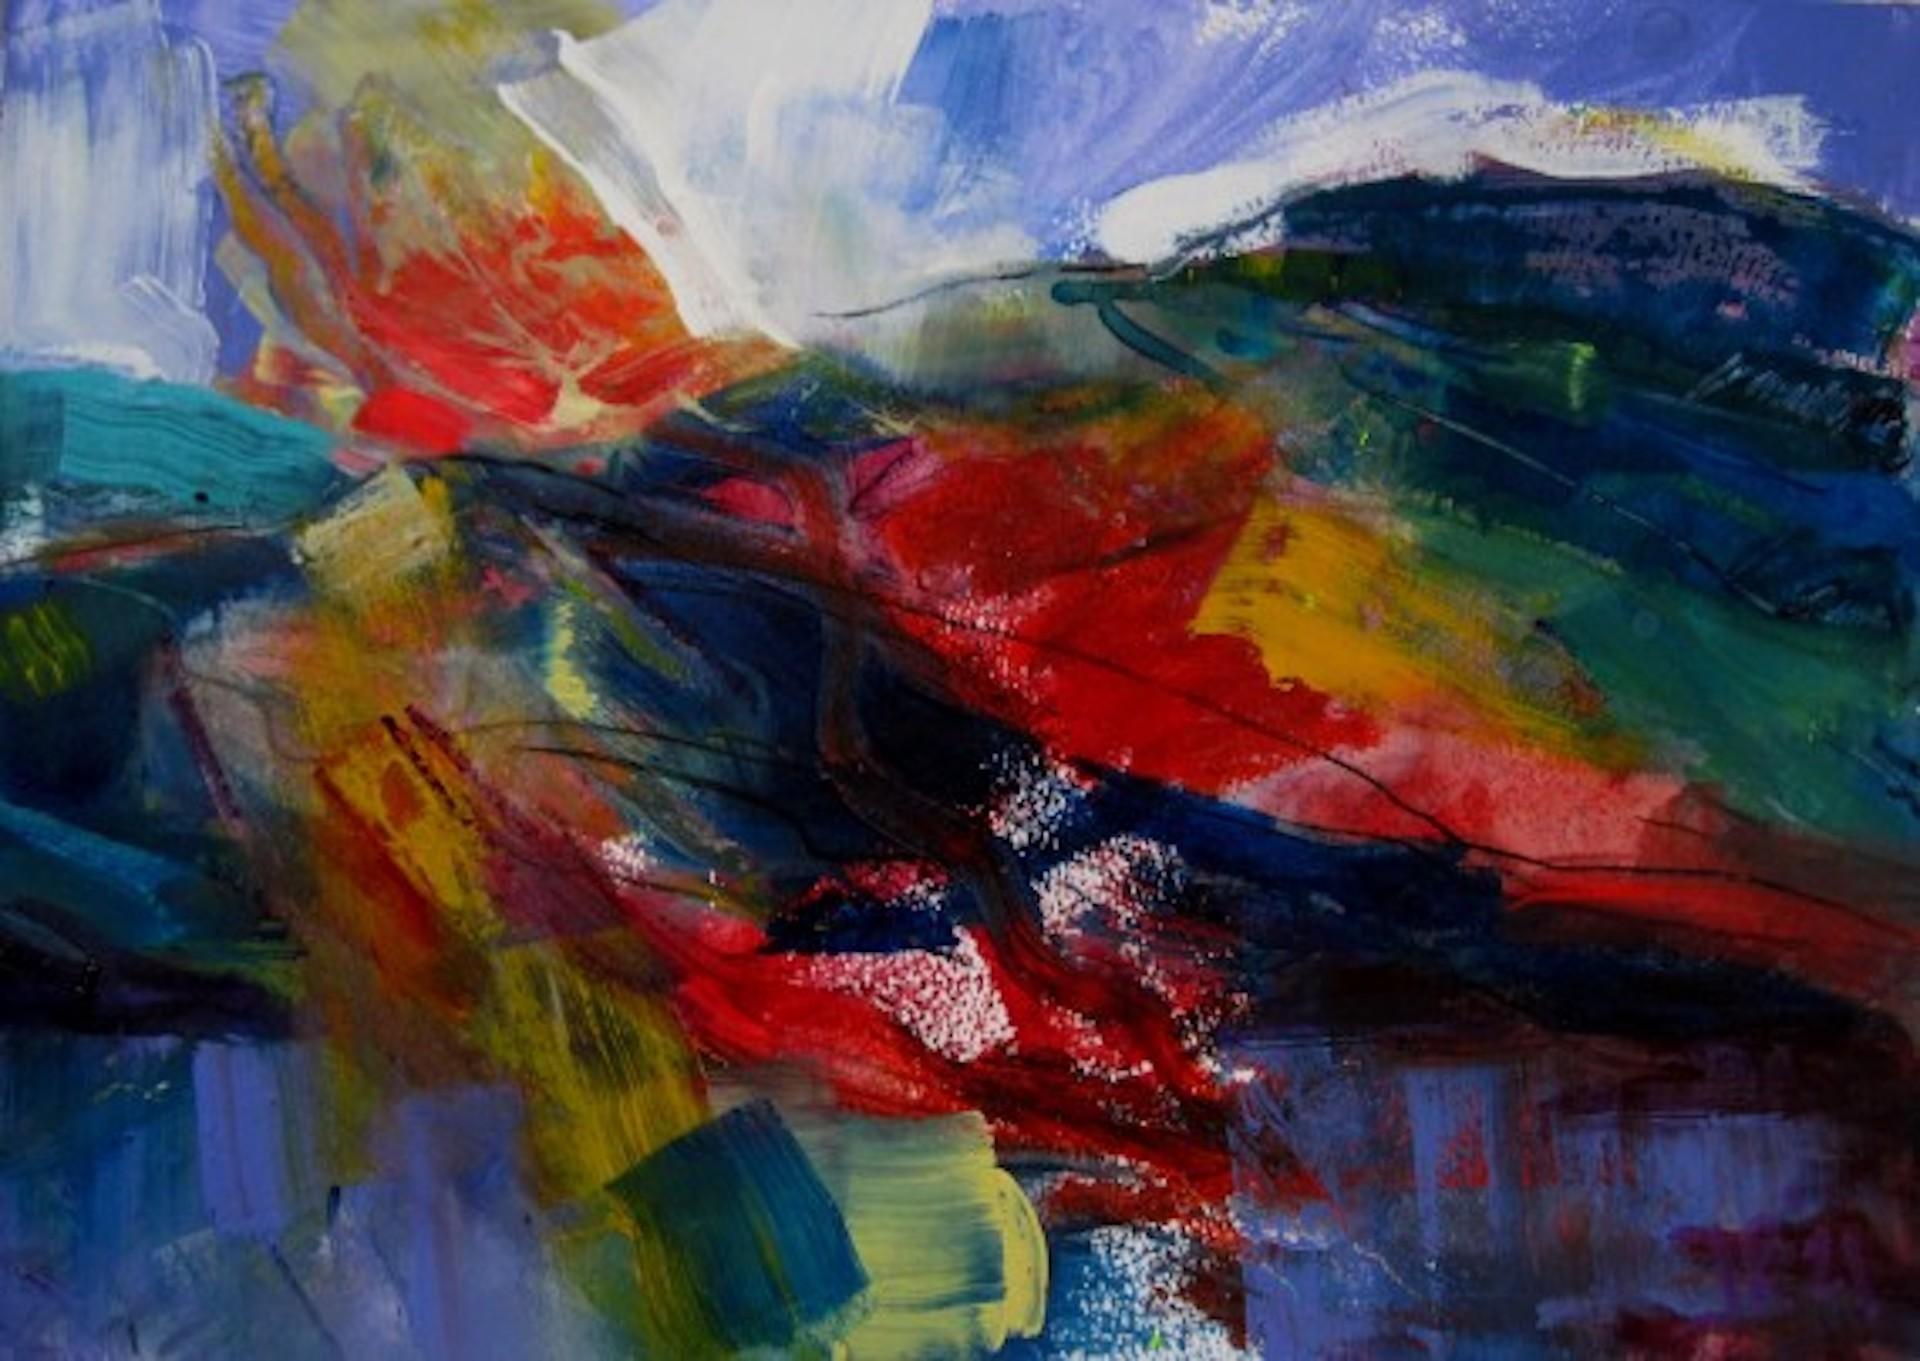 Shoreline, Jon Rowland, peinture expressionniste abstraite contemporaine originale